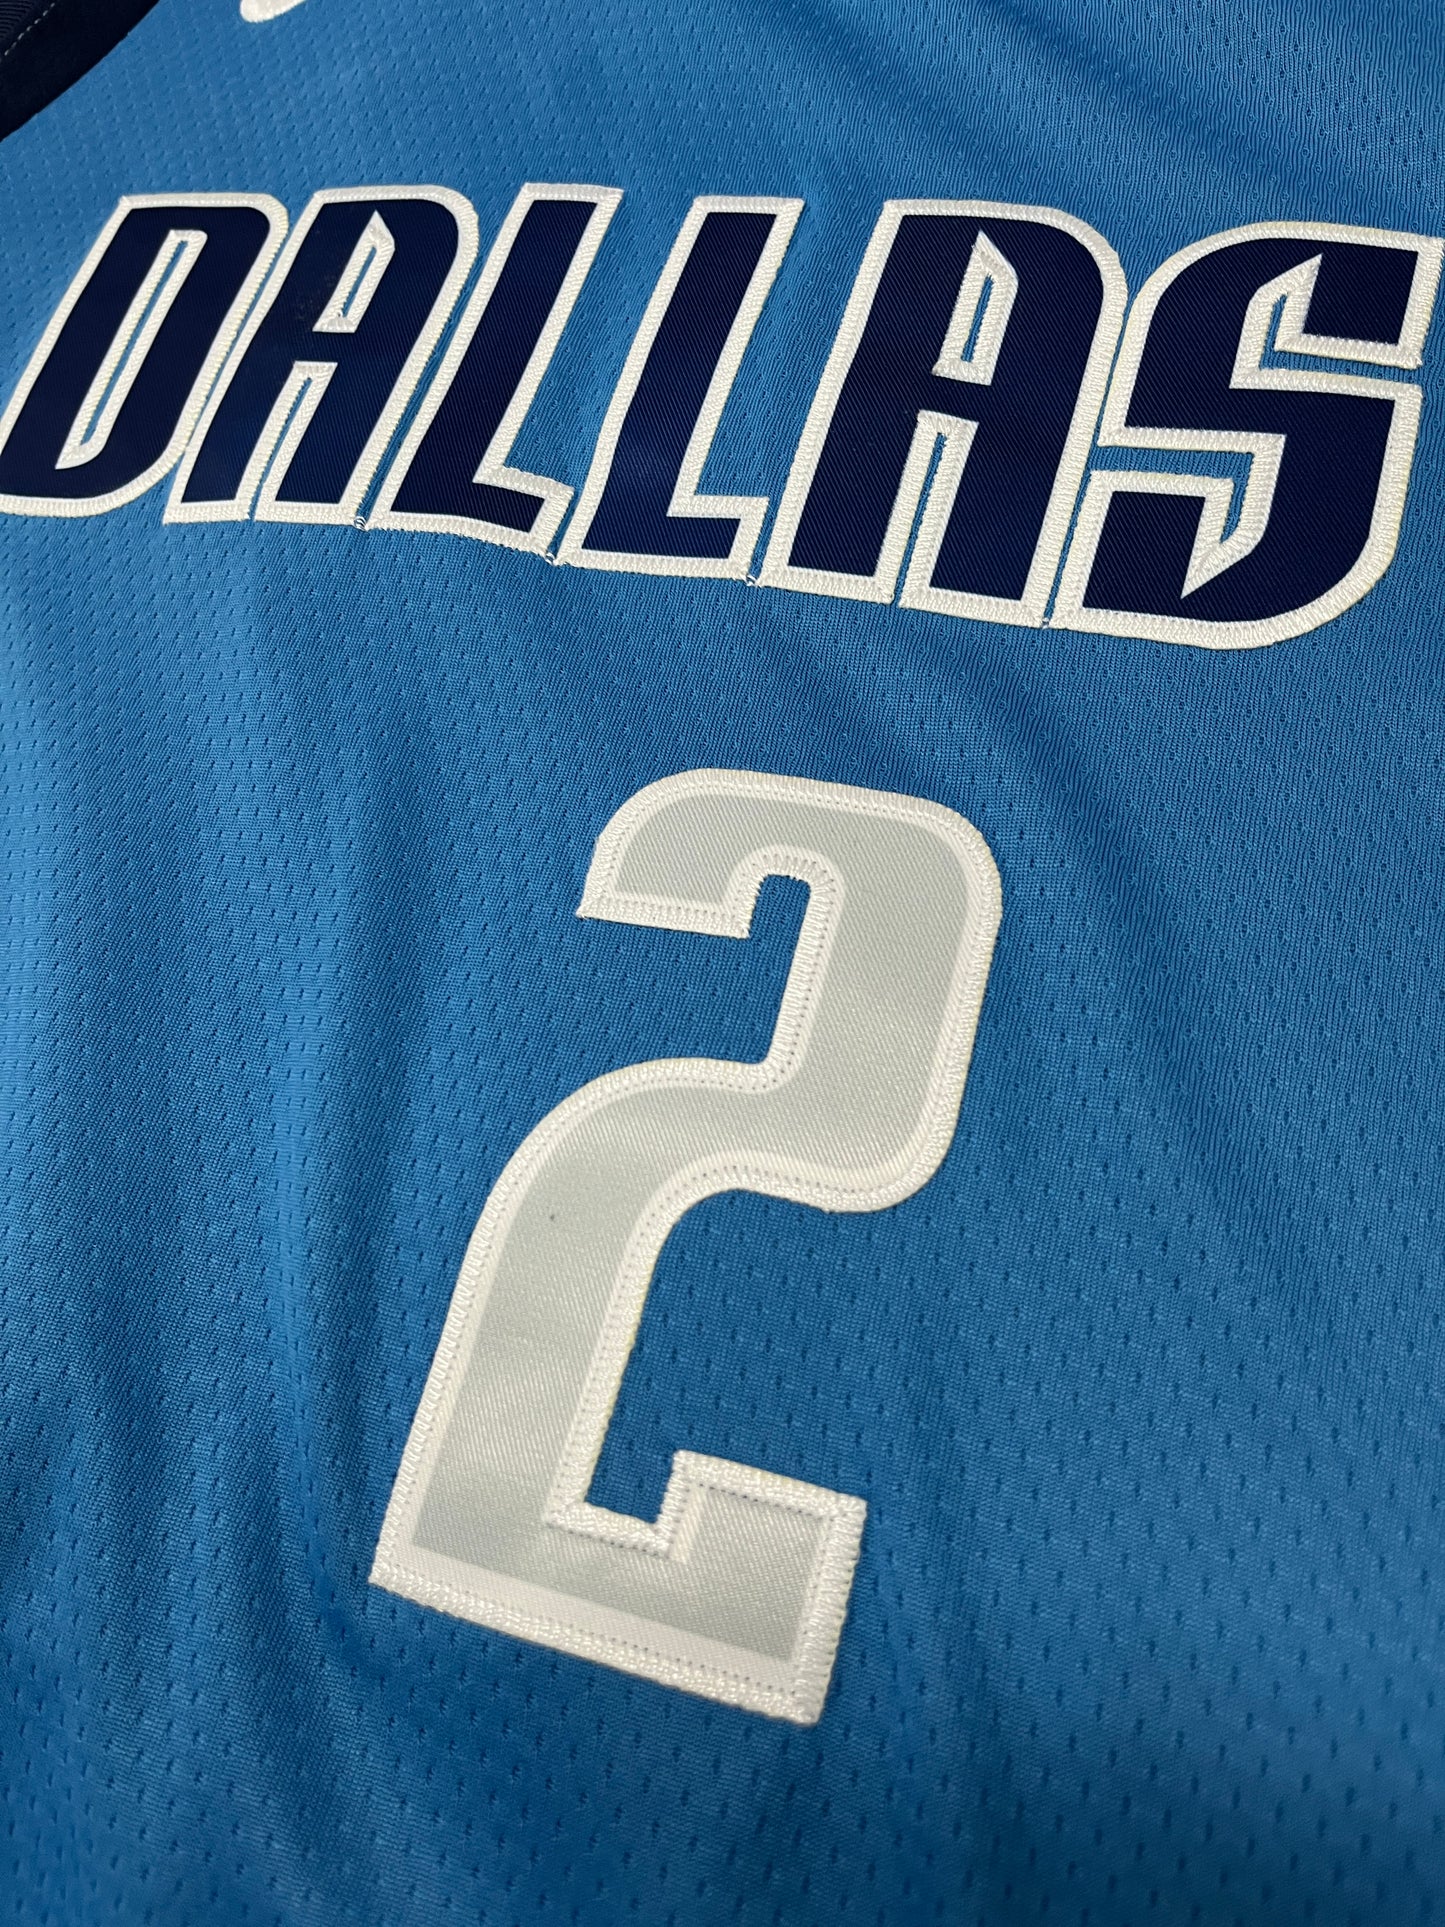 KYRIE IRVING 2 Light Blue Dallas Mavericks NBA Jersey